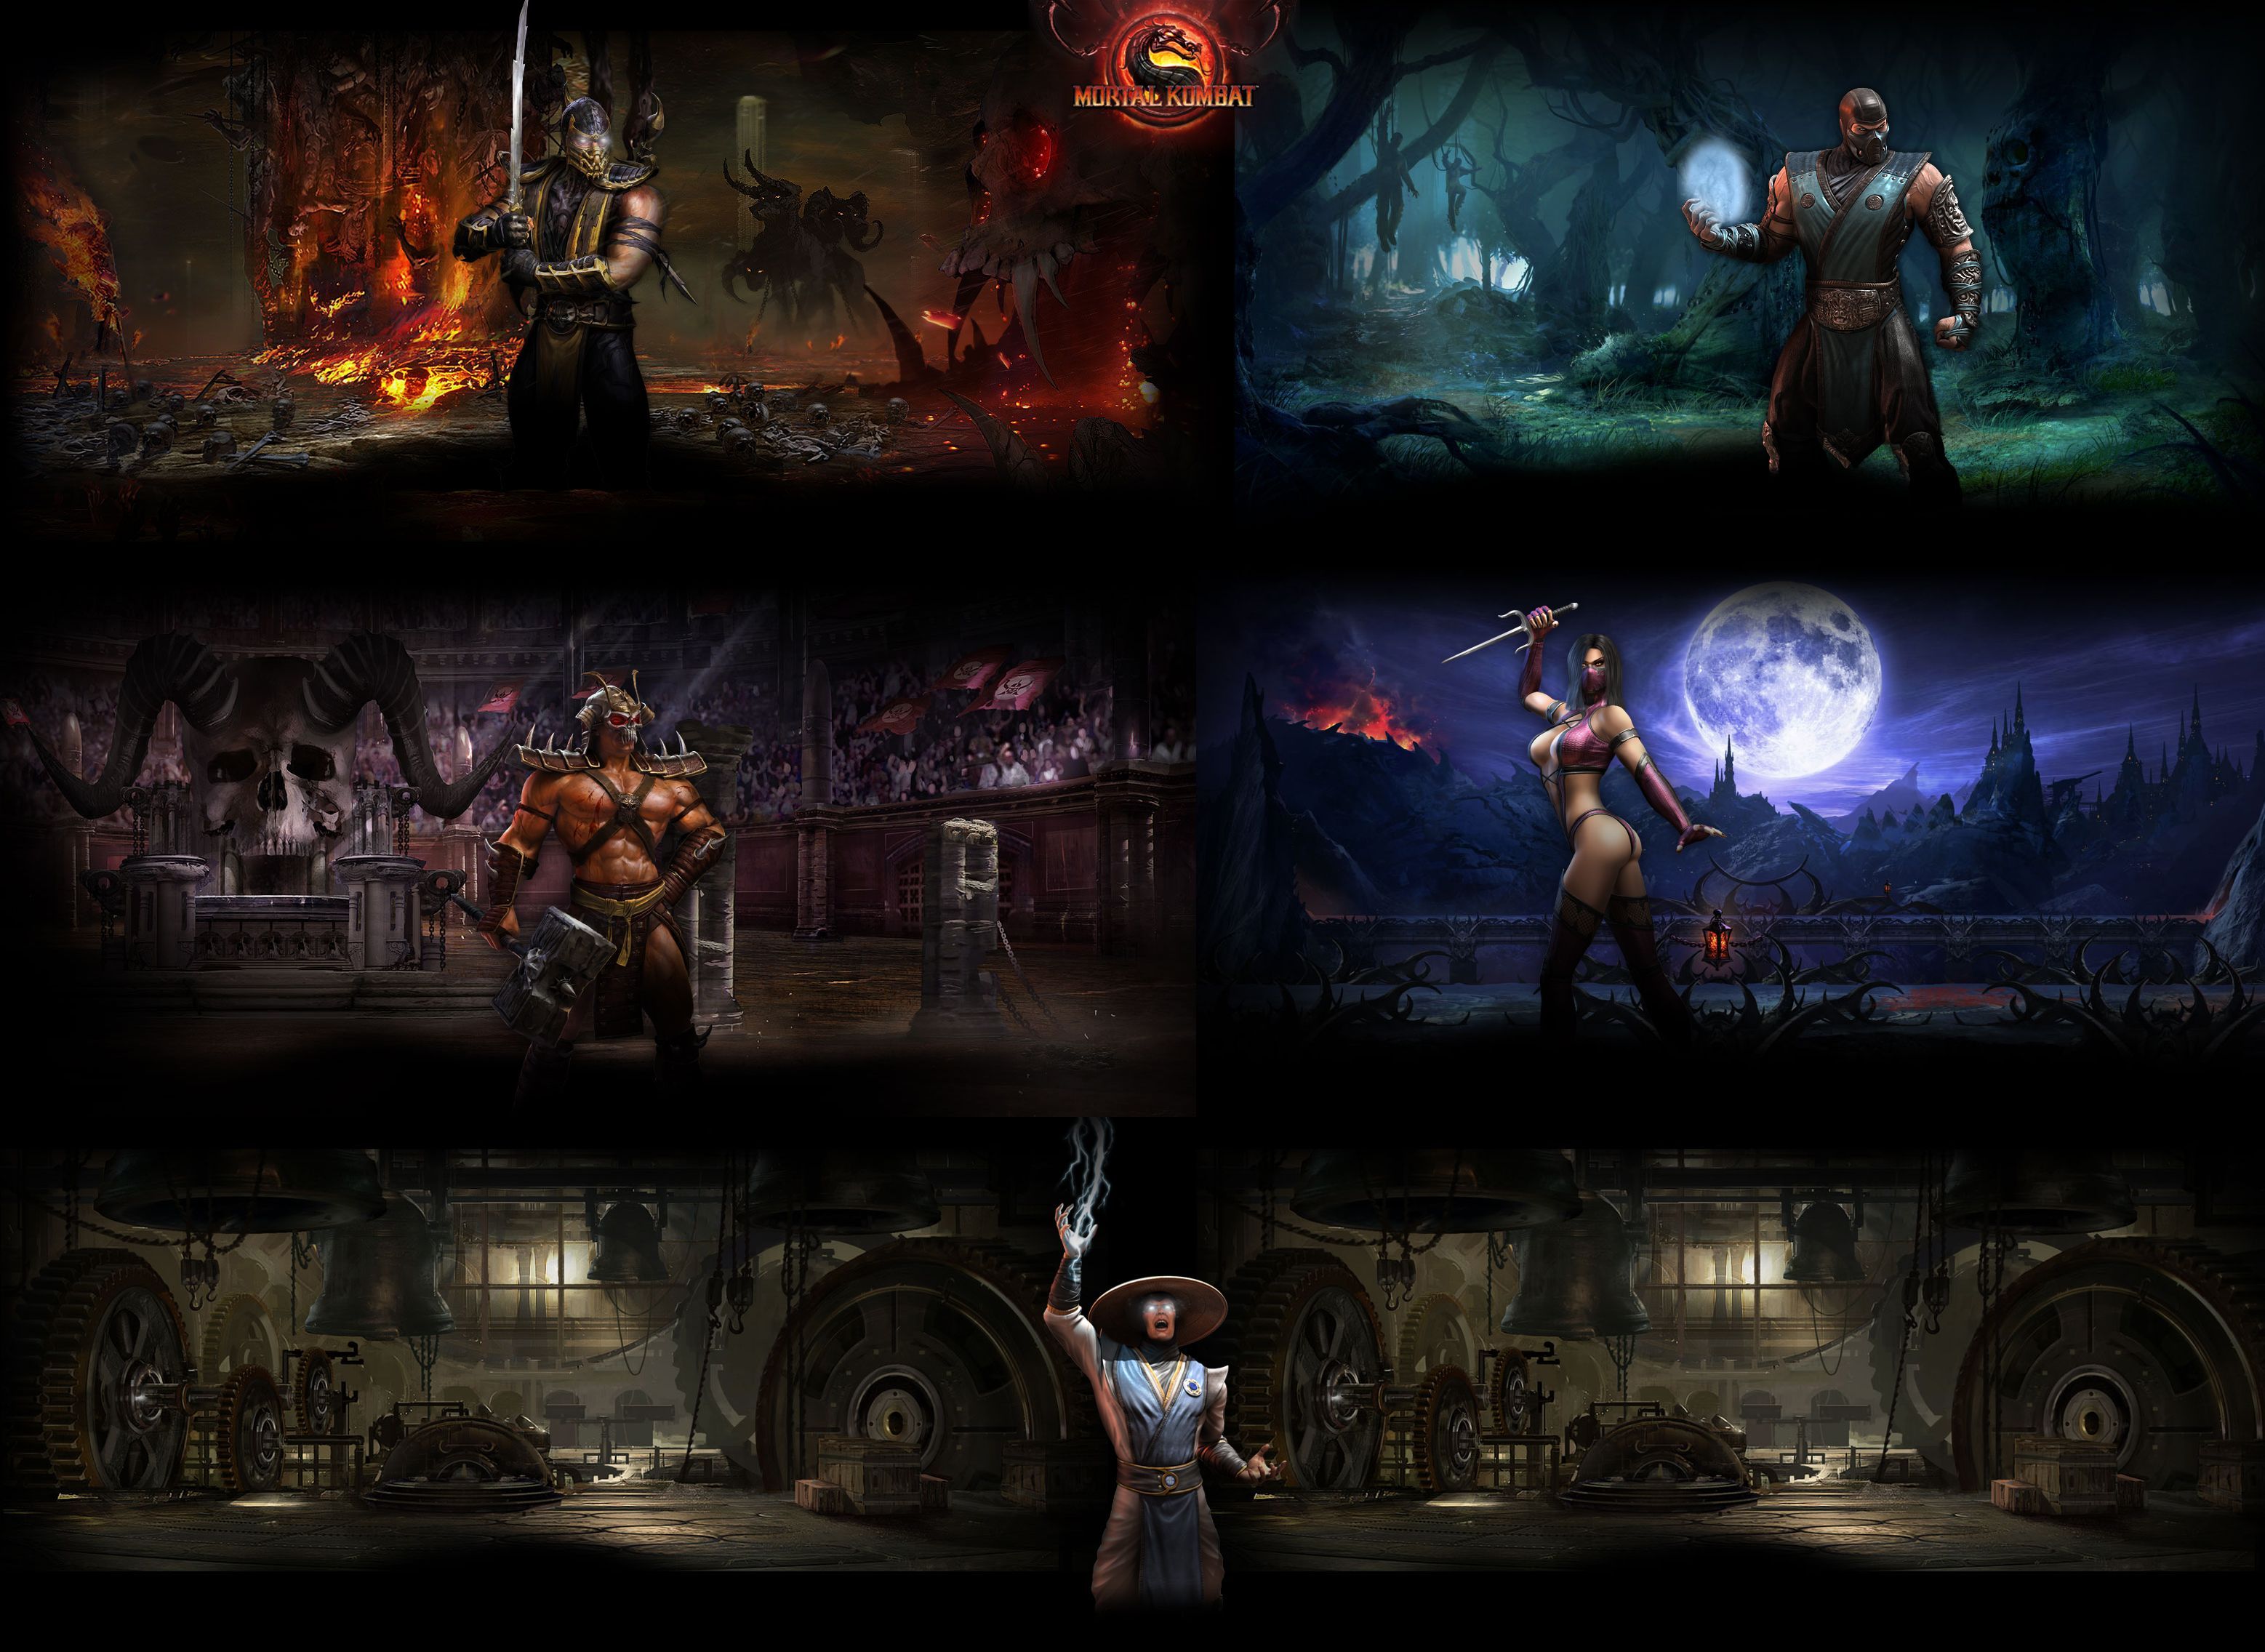 Mortal Kombat 9 Wallpaper 2 by father12345 on DeviantArt